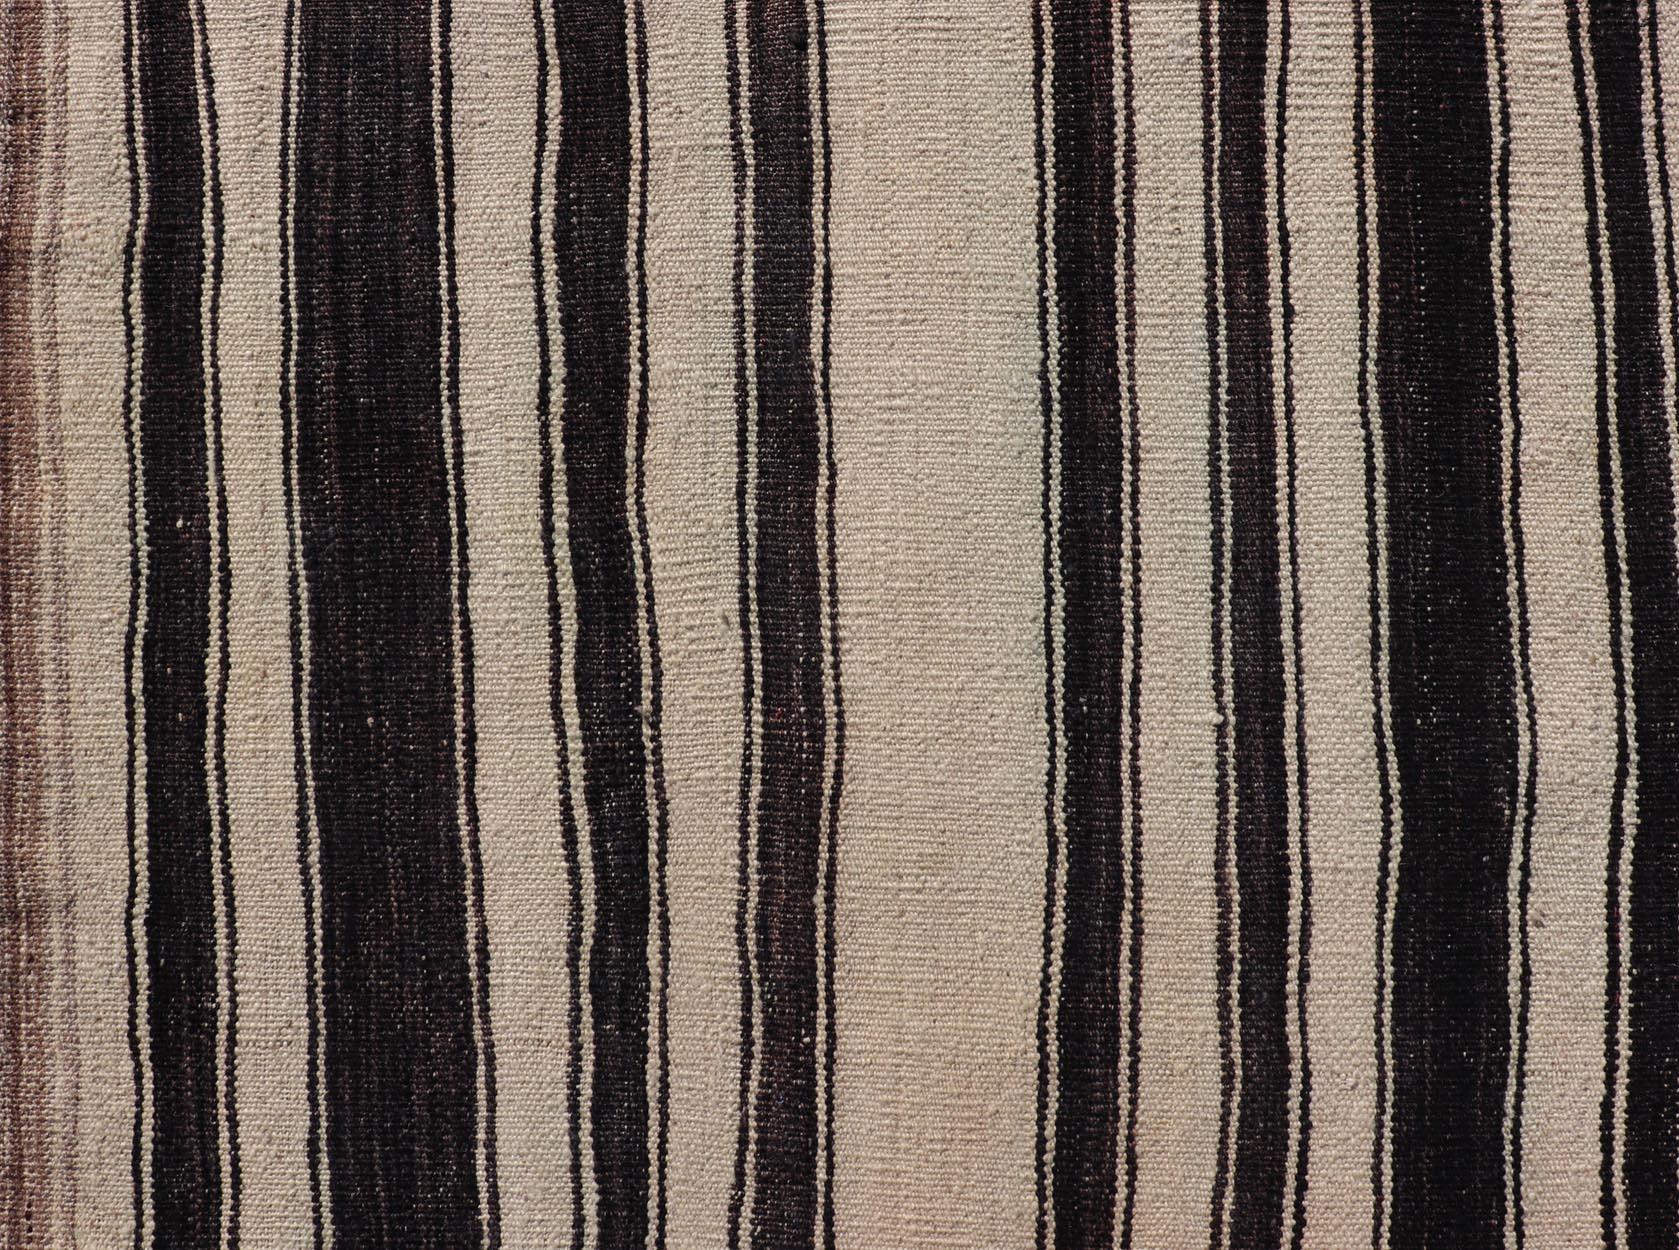 Wool Stripe Design Turkish Vintage Flat-Weave Rug in Dark Brown, Taupe, and Cream  For Sale